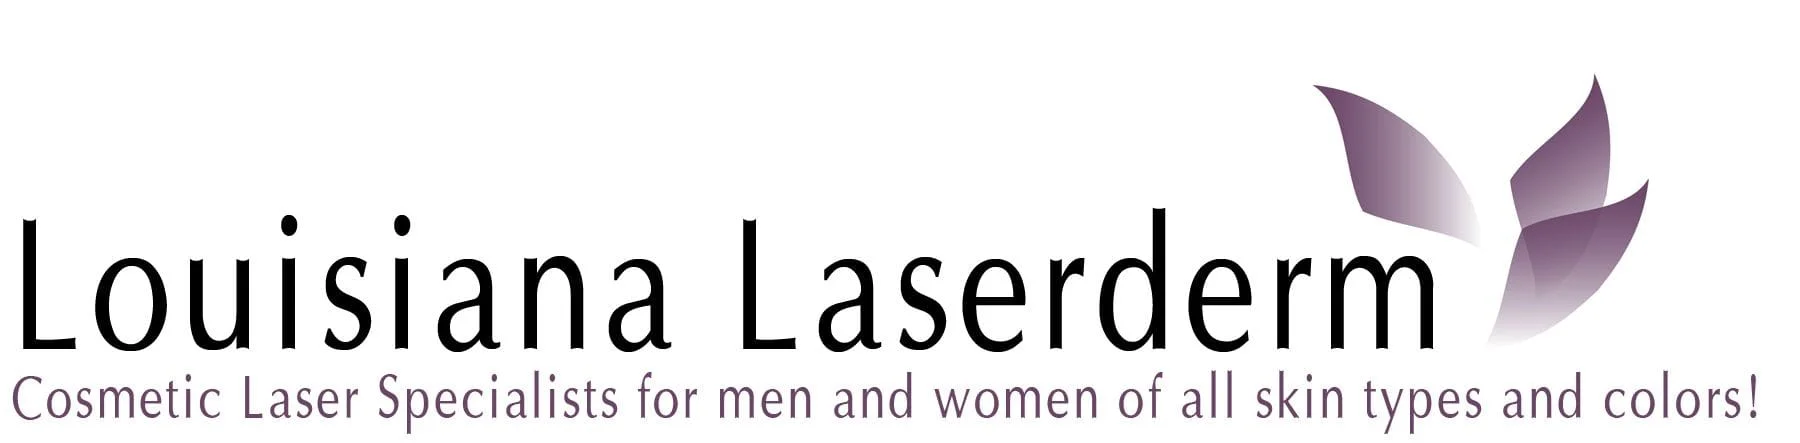 Louisiana Laserderm, laserderm